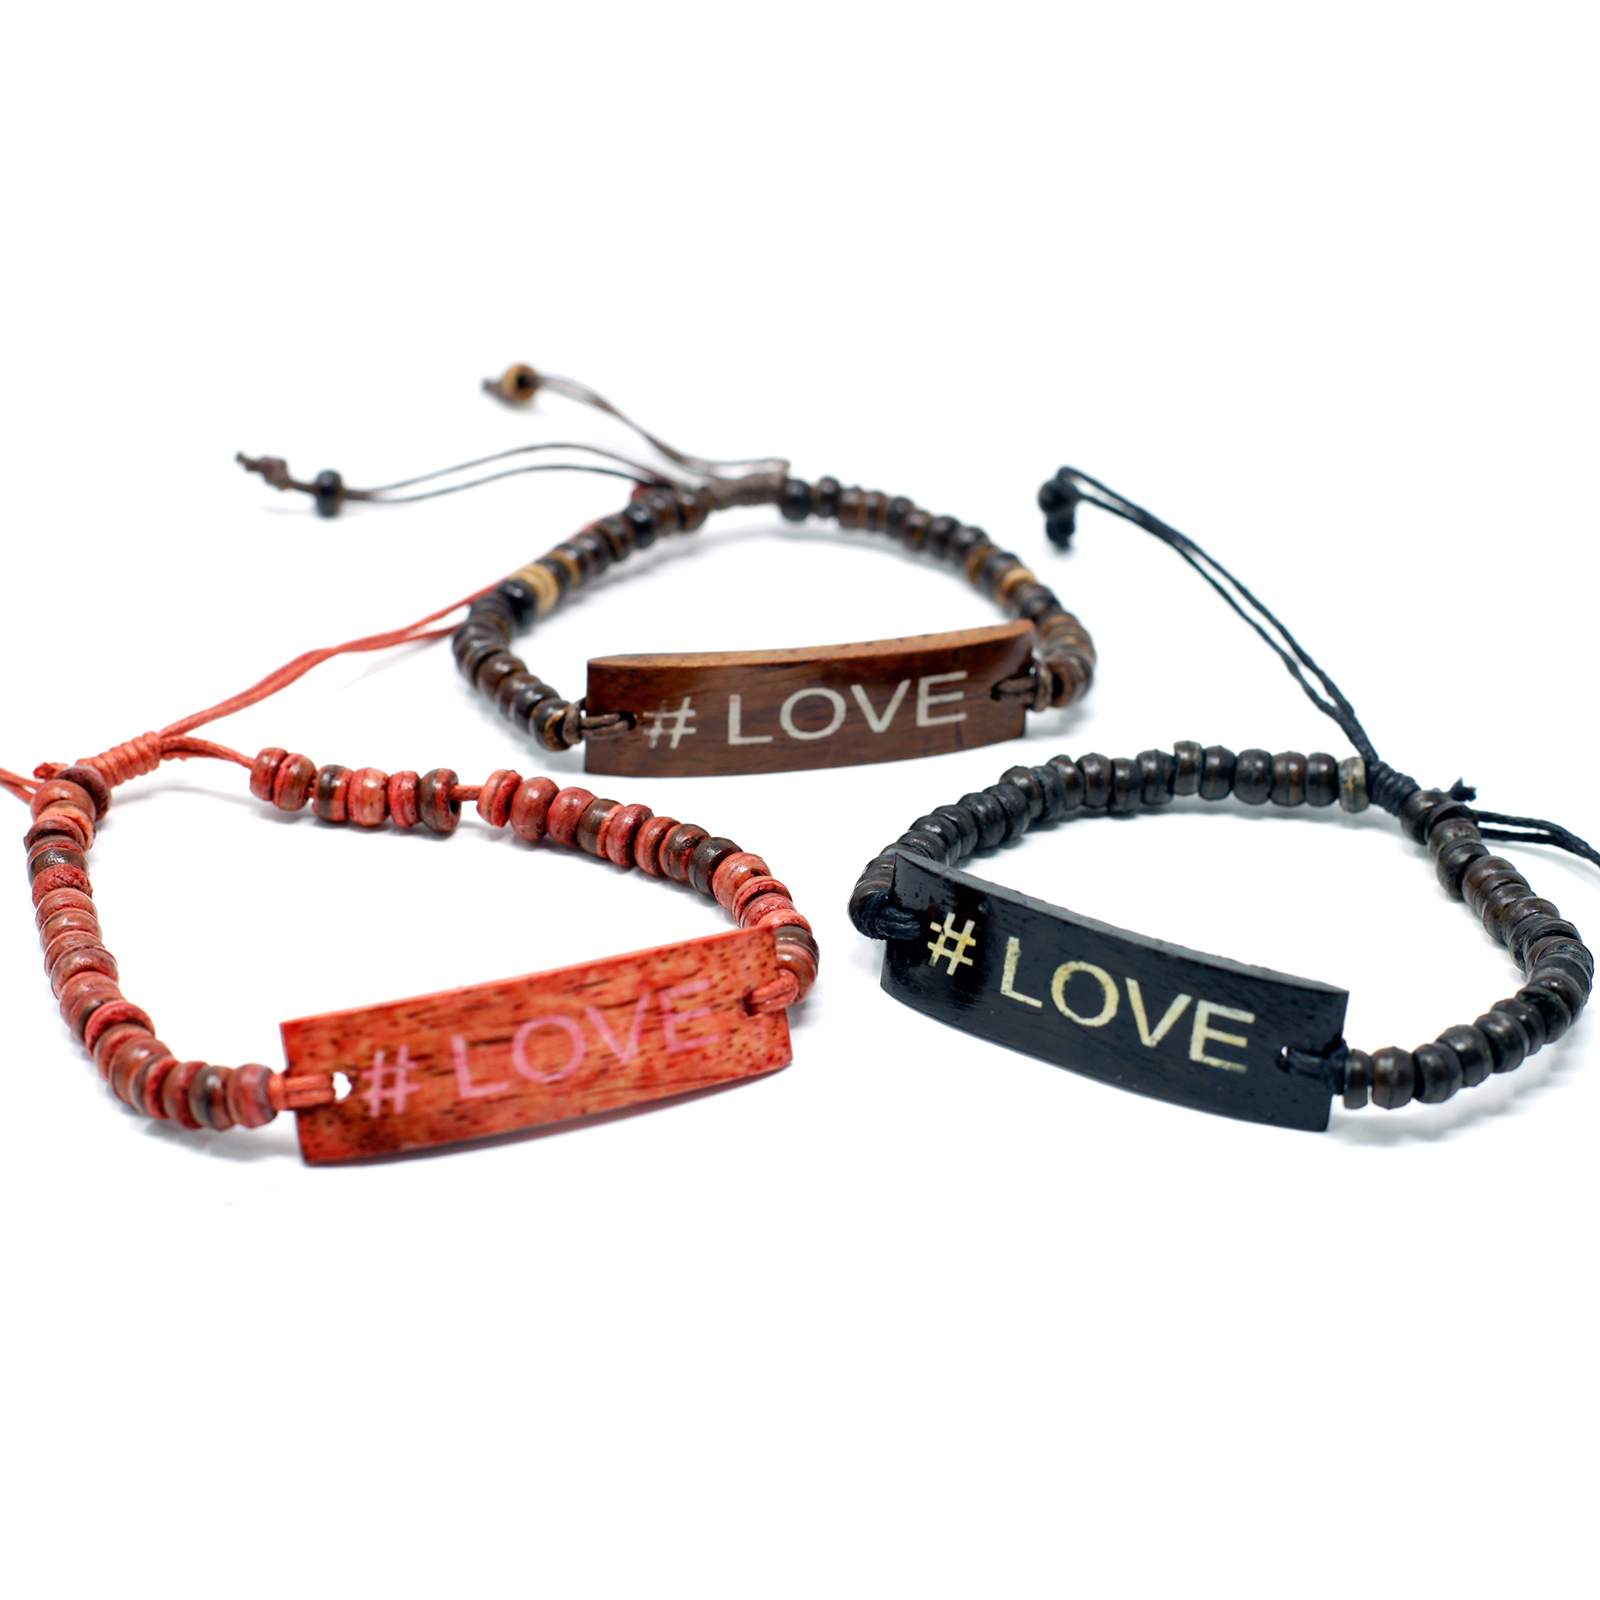 6 x Coco Slogan Bracelets - #Love